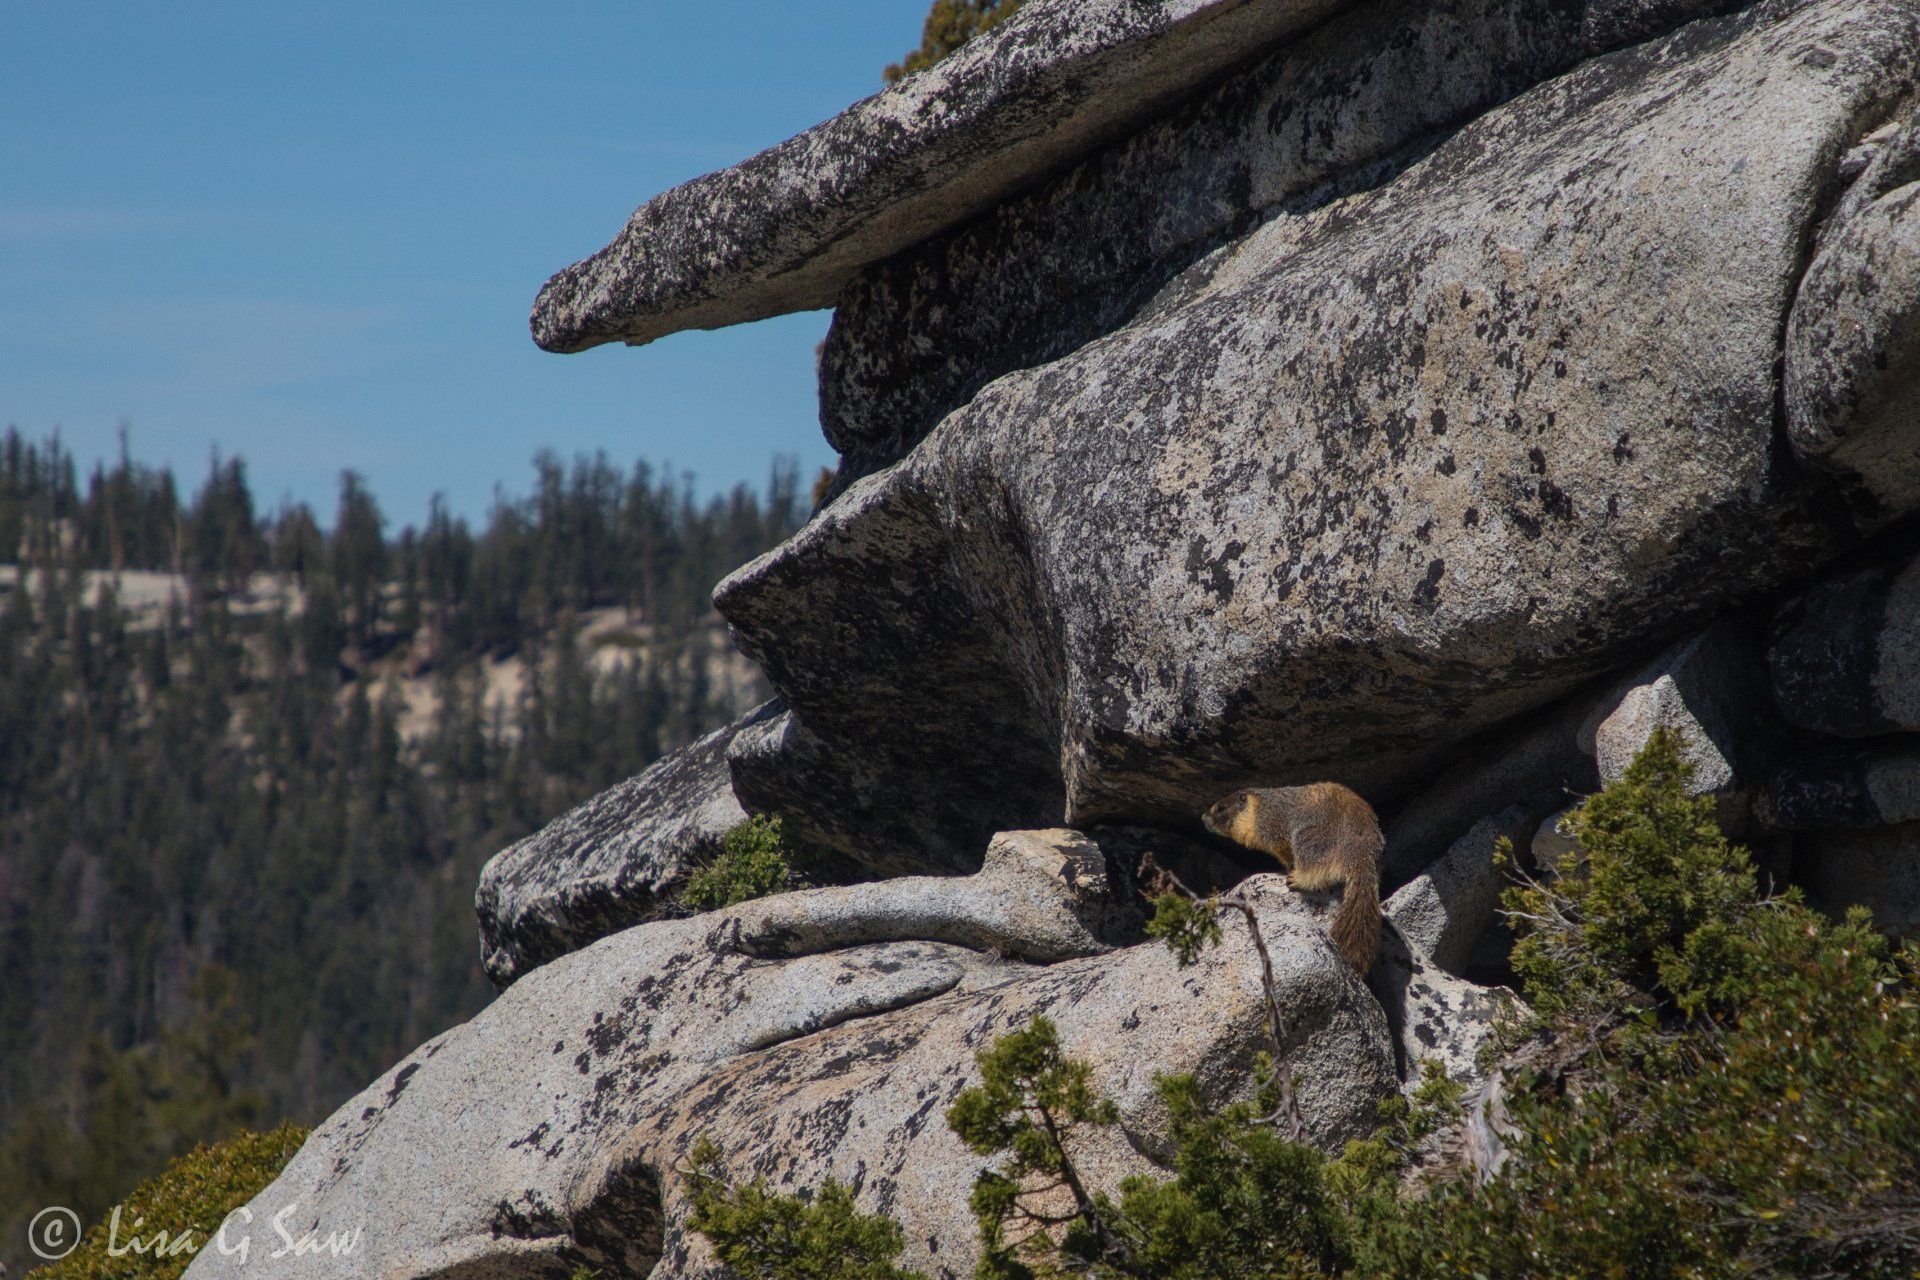 Yellow-Bellied Marmot in California